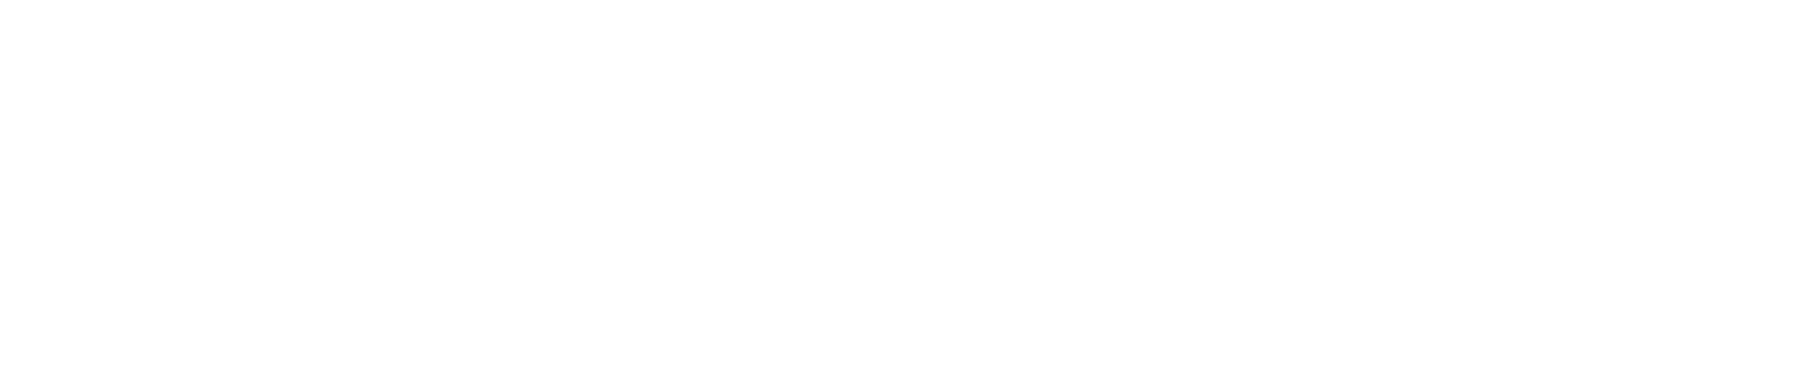 NEURAL GP network 島根県発・総合診療医養成プロジェクト